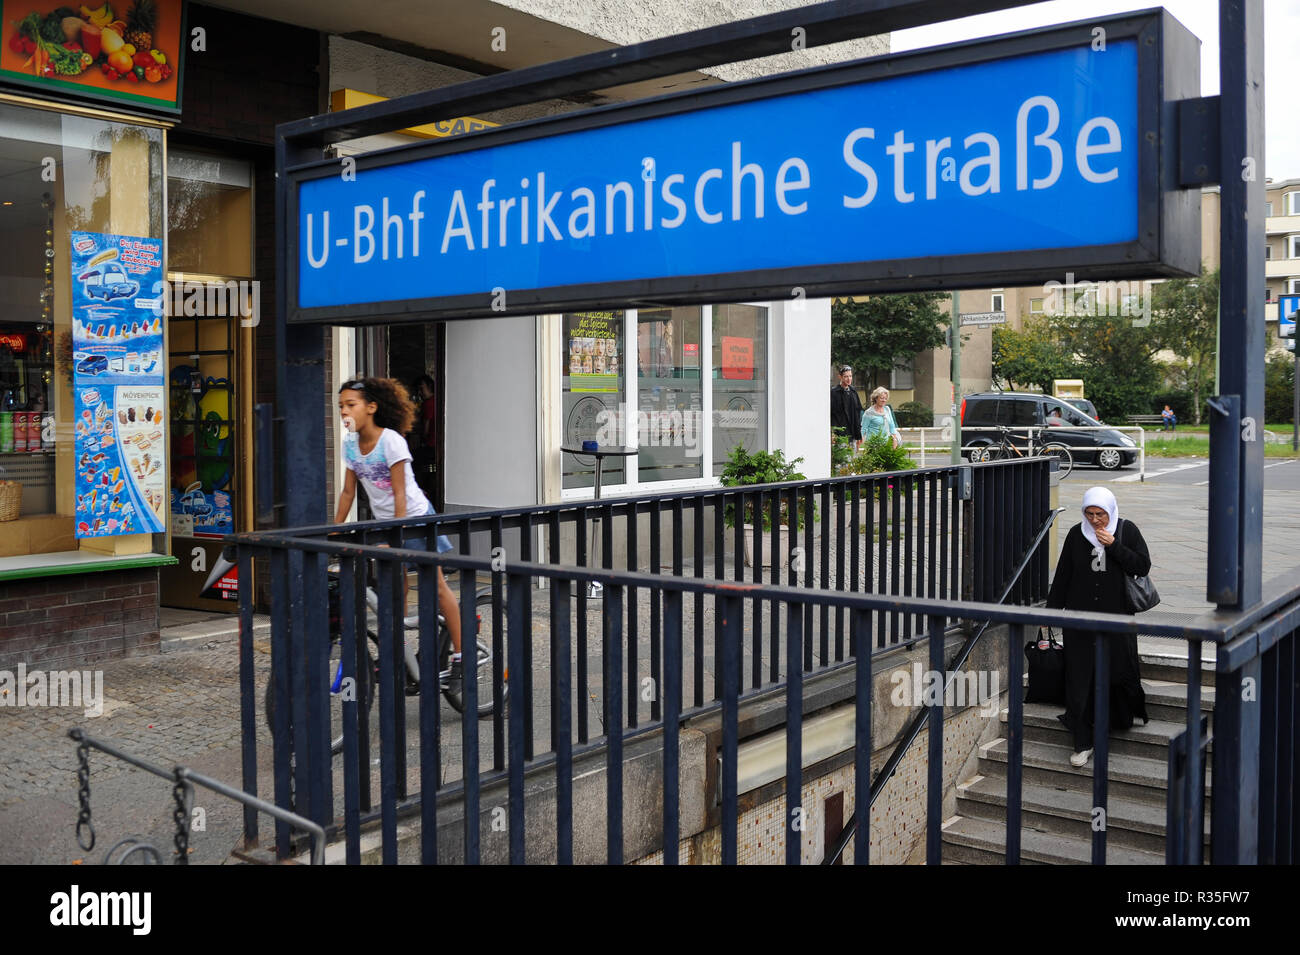 03.10.2011, Berlin, Germany, Europe - Entrance to the underground metro station Afrikanische Strasse in Berlin-Wedding. Stock Photo